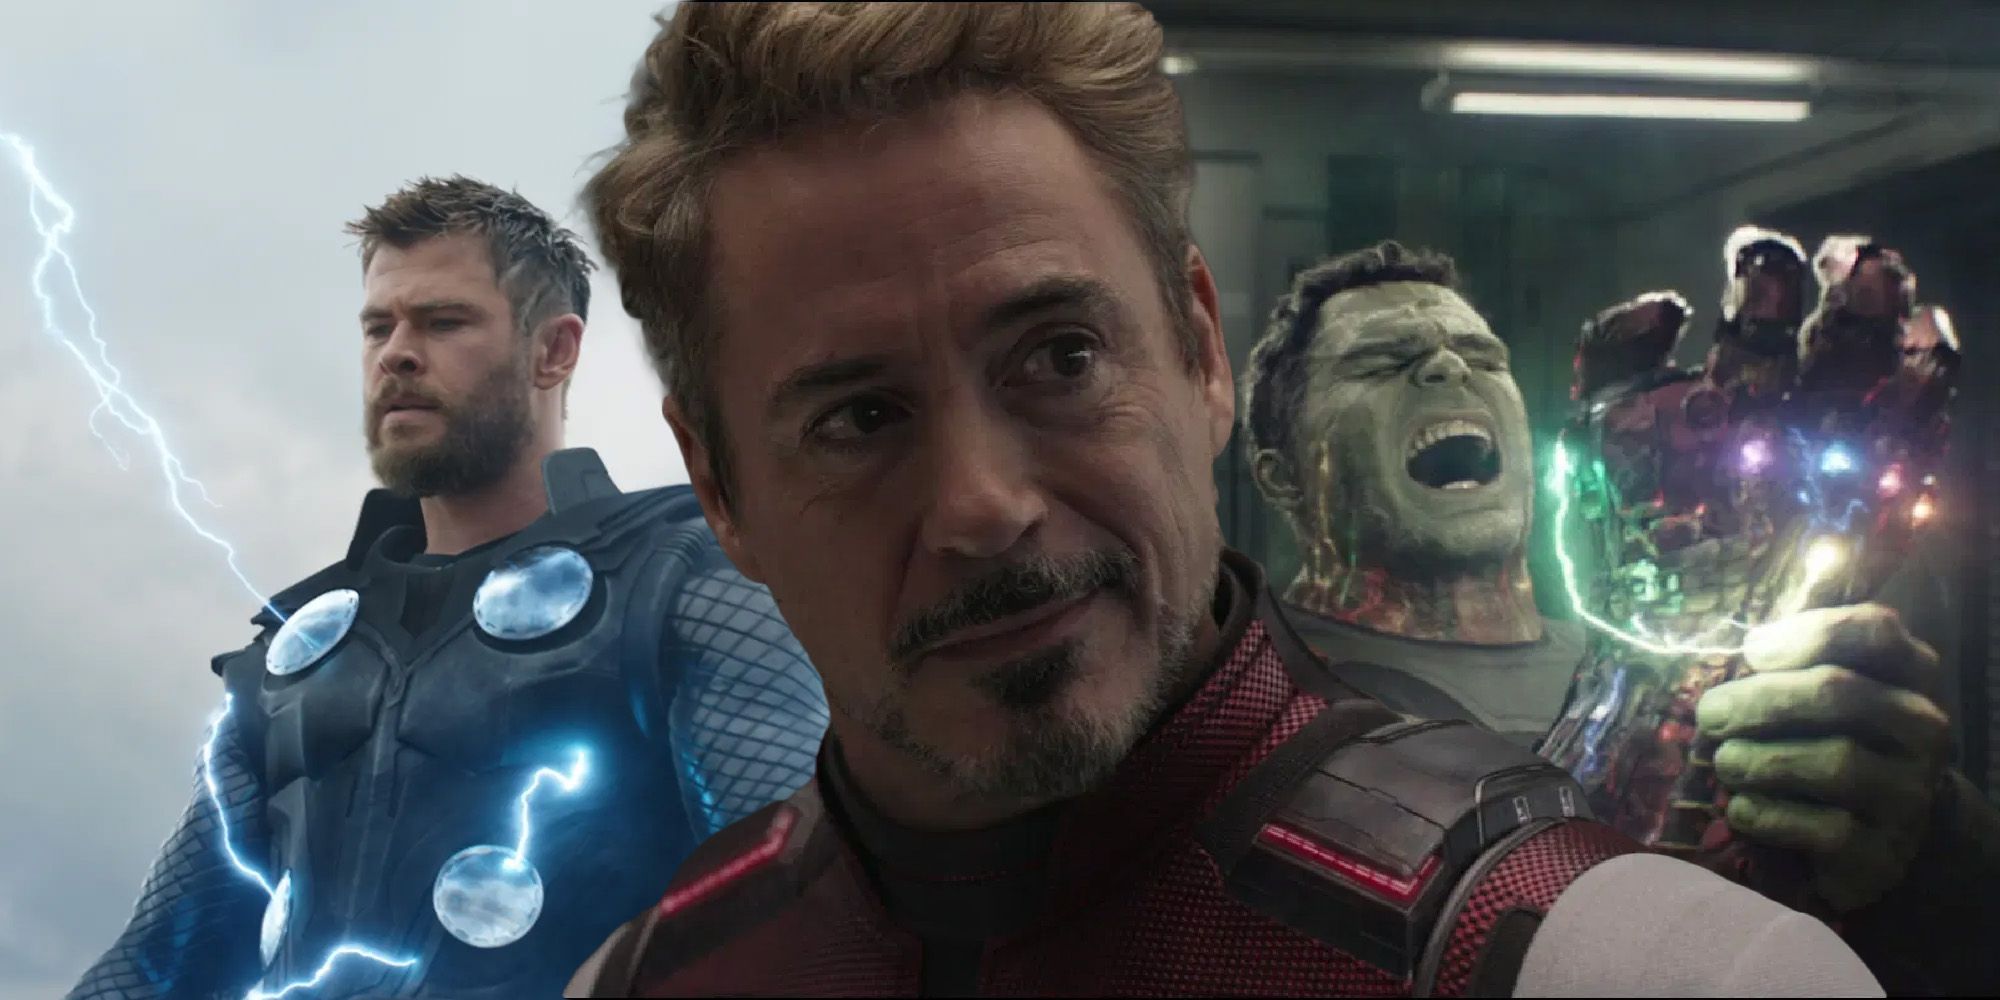 Robert downey jr Iron man Avengers Endgame Thor smart hulk